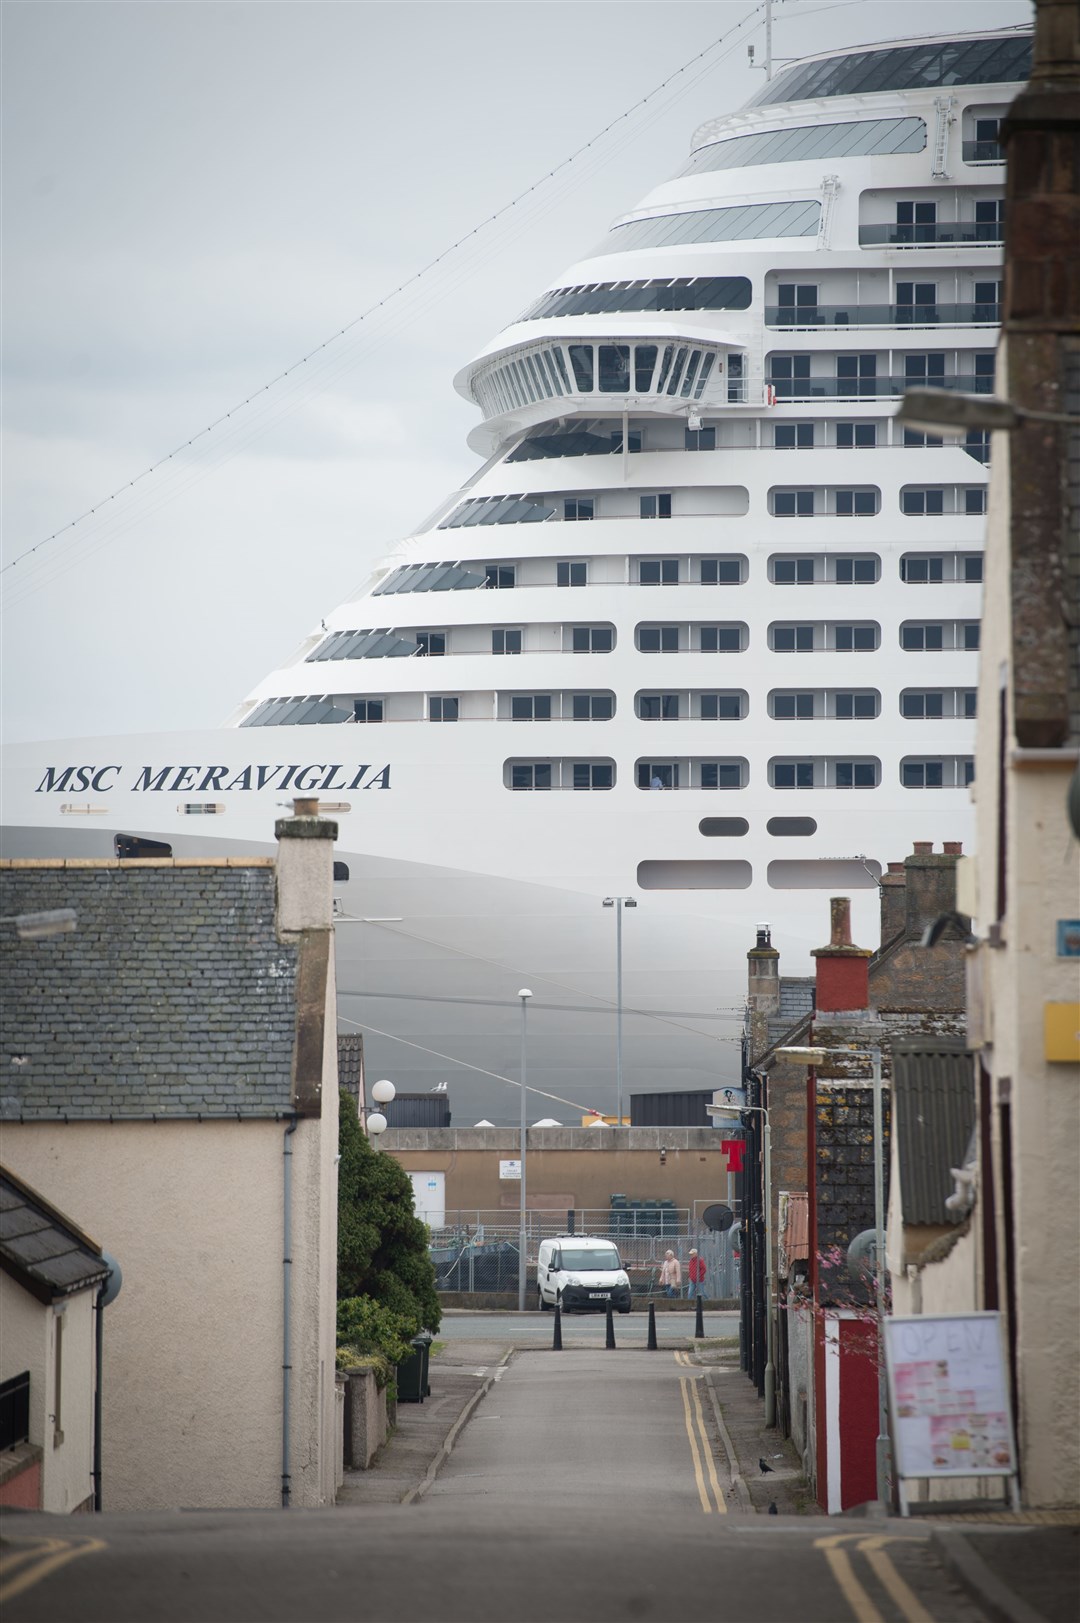 Better days: The massive MSC Meraviglia docked at Invergordon. Picture: Callum Mackay.